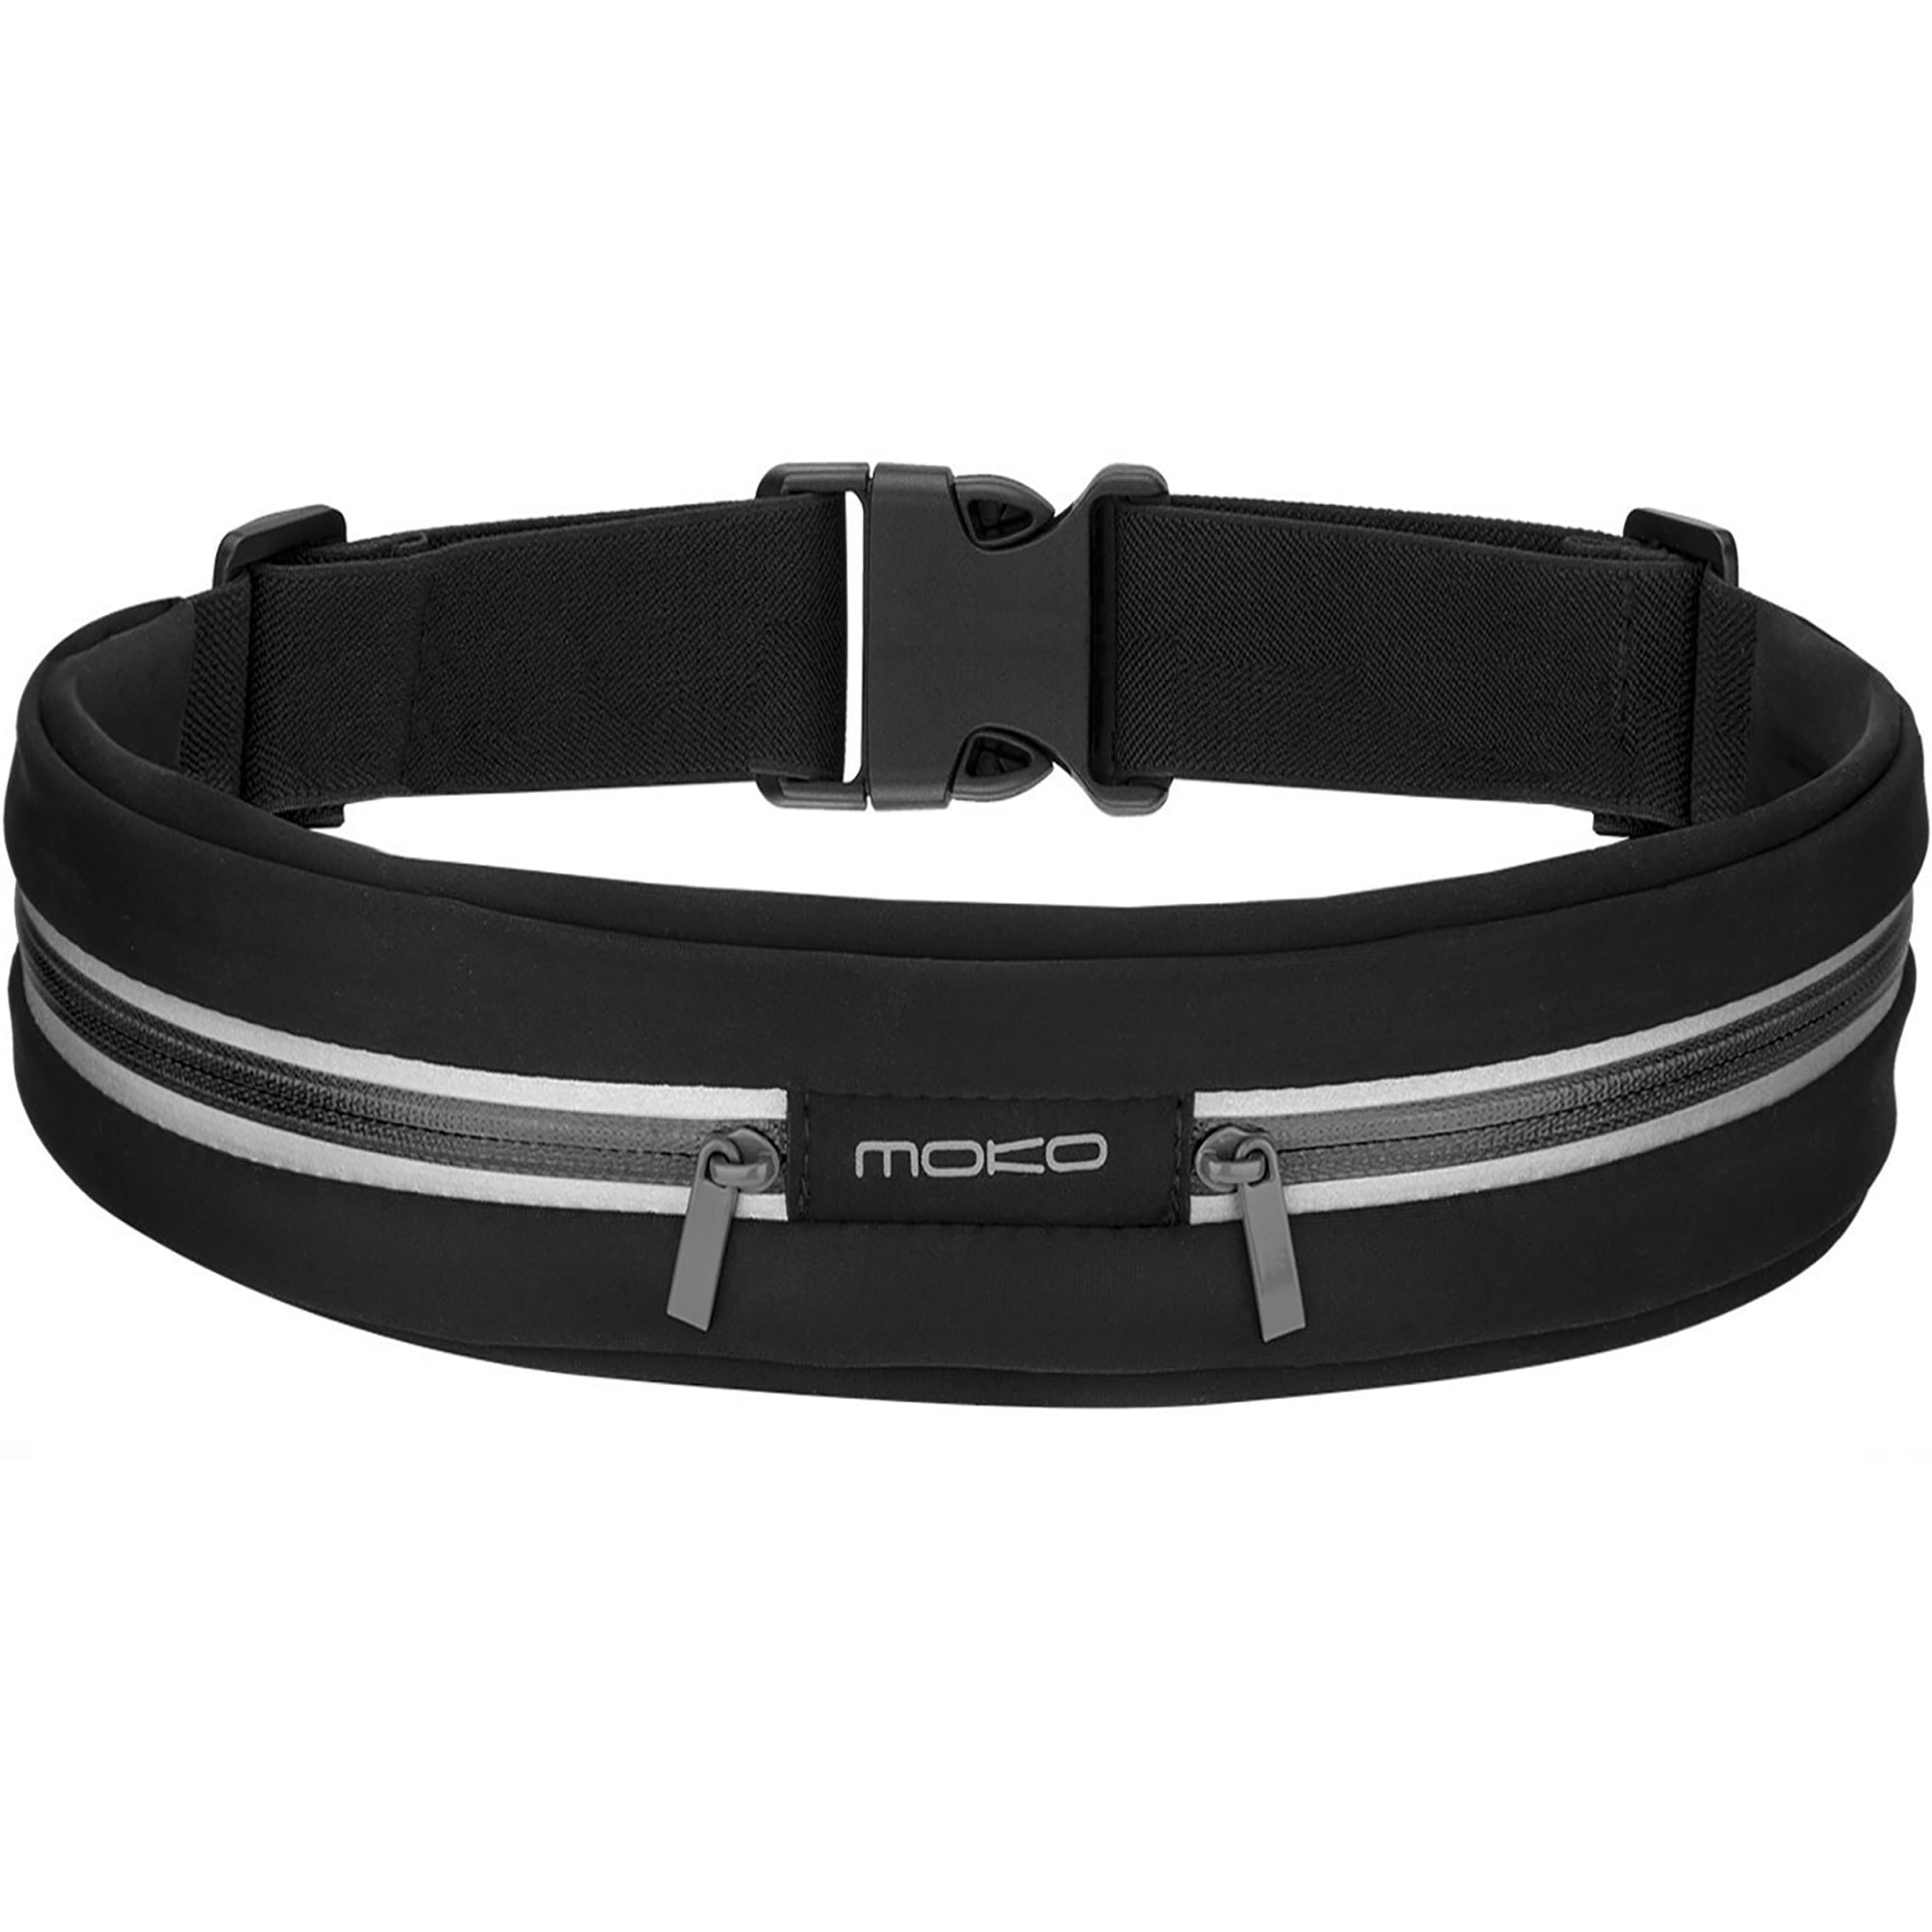 Running Belt Waist Pack MoKo Outdoor Sports Waterproof Fanny Pack/Fitness Workout Belt/Runner Belt with Dual Bottle Holder for iPhone X/8/7 Plus Galaxy Note 8/S9+/S9 